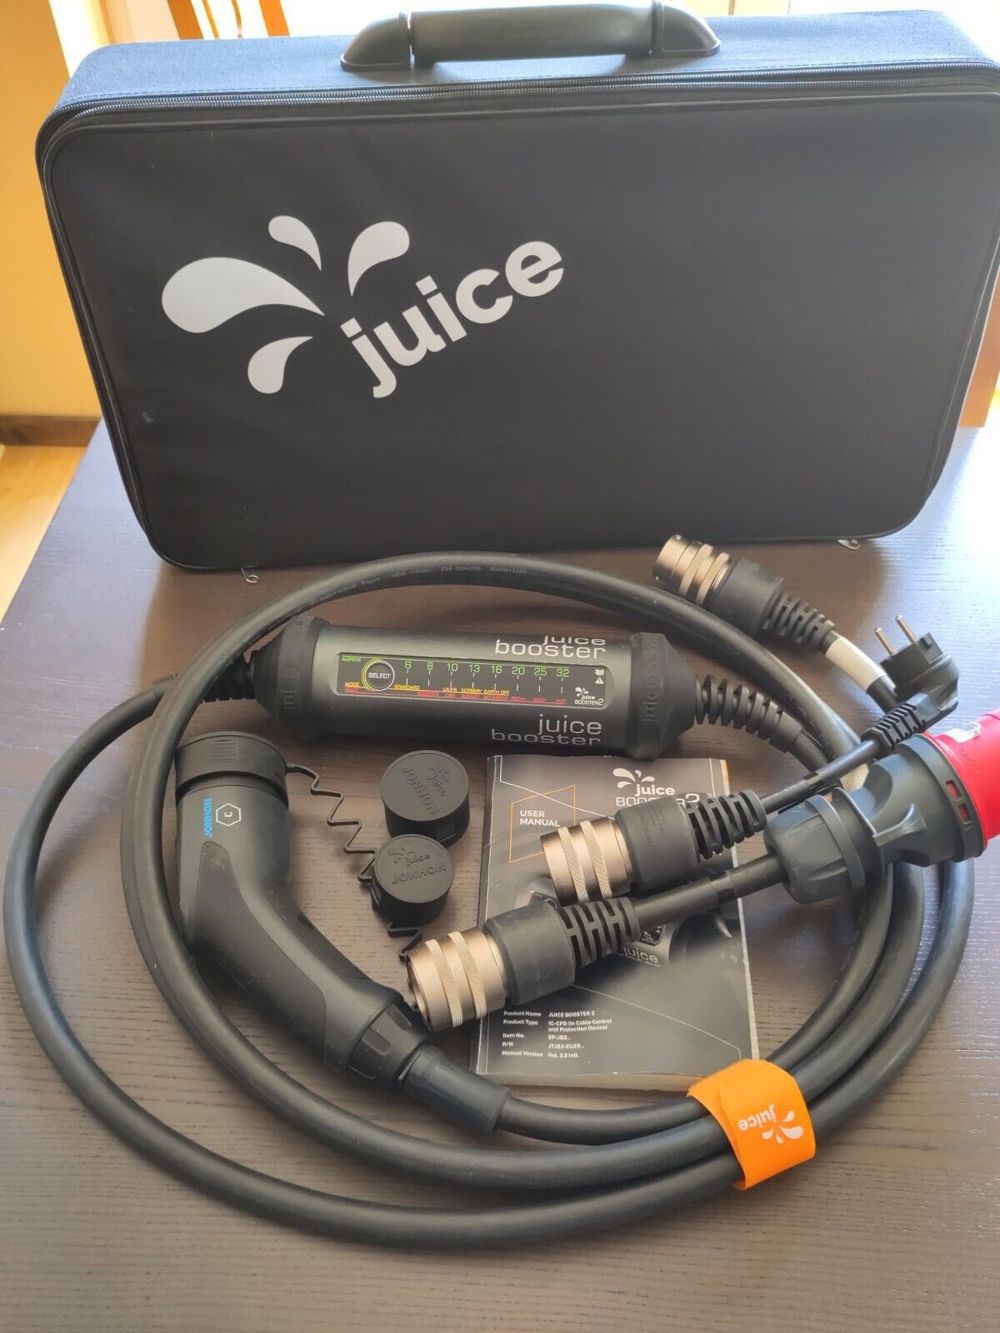 Autoteile juice booster 2. 32A und 230volt Adapter